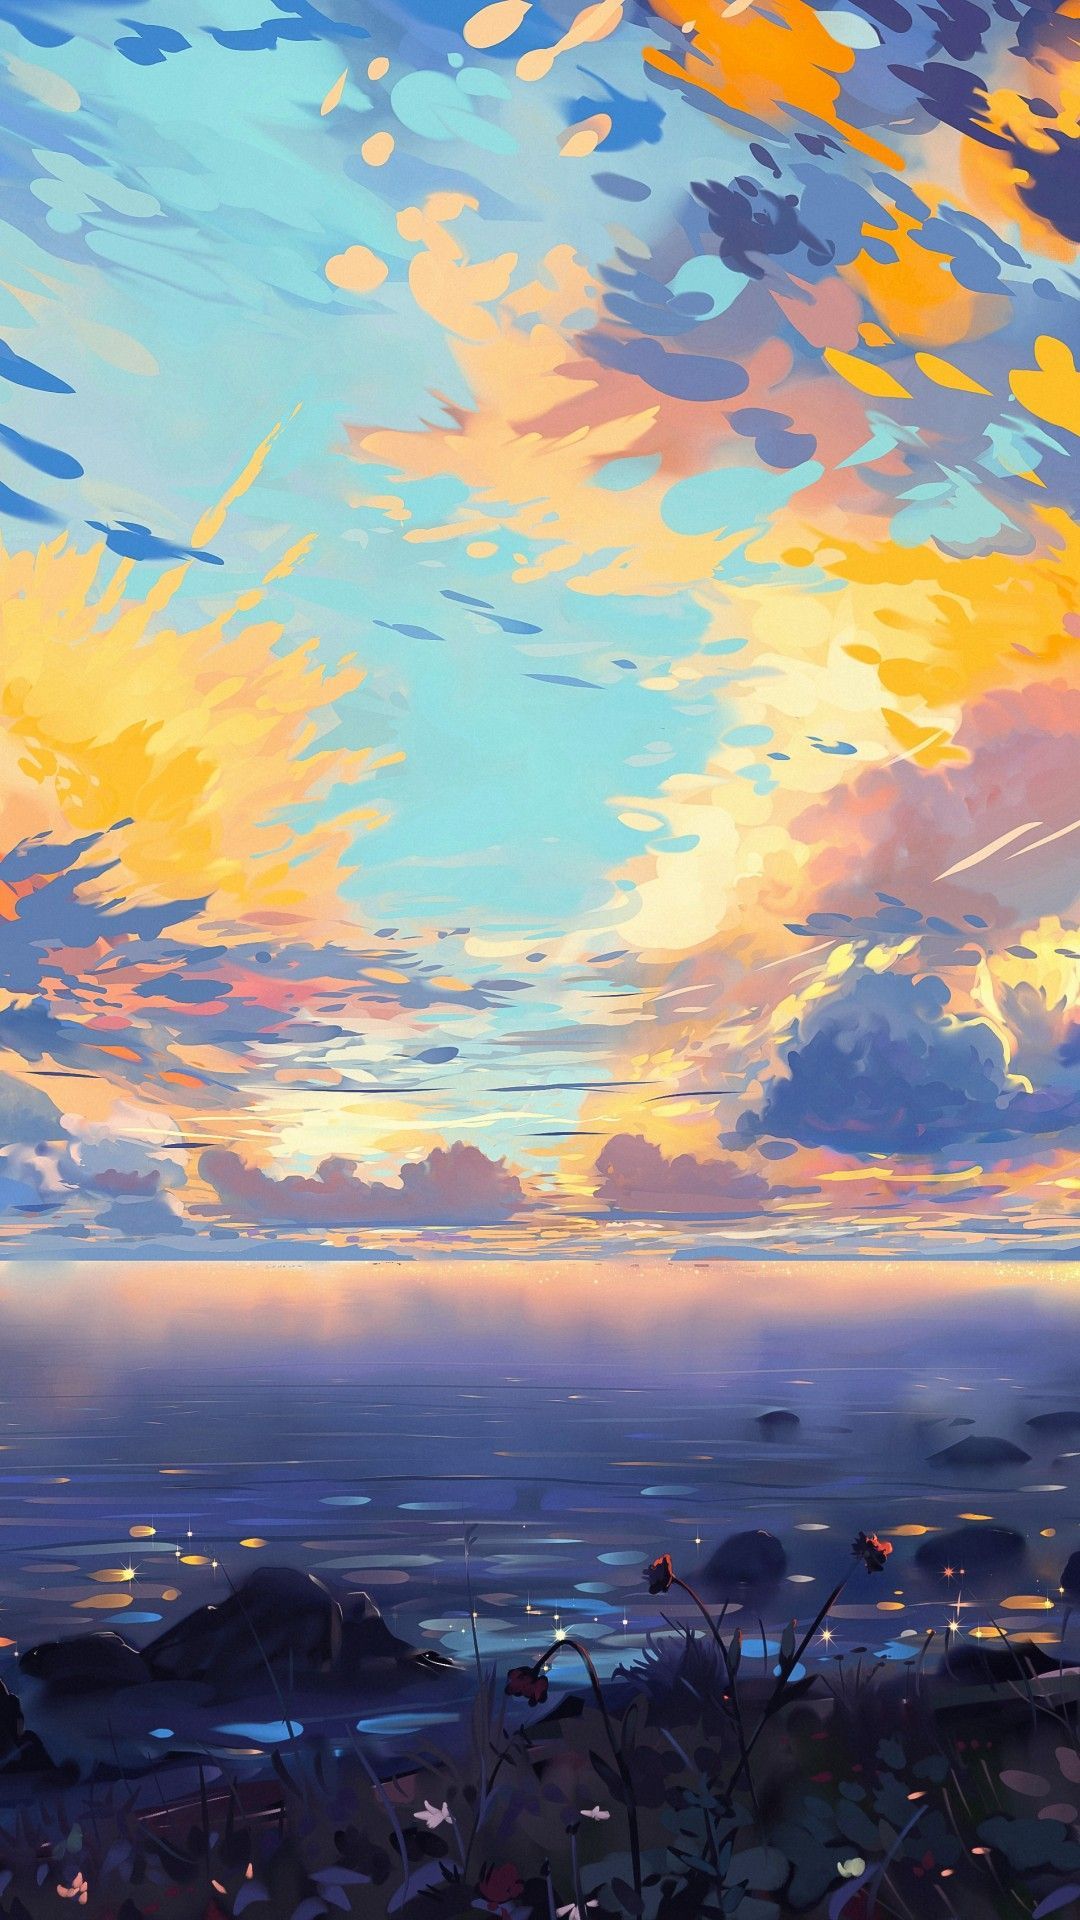 Anime Landscape, Sea, Ships, Colorful, Clouds, Scenic, Tree, Horizon. Scenery wallpaper, Landscape wallpaper, Anime scenery